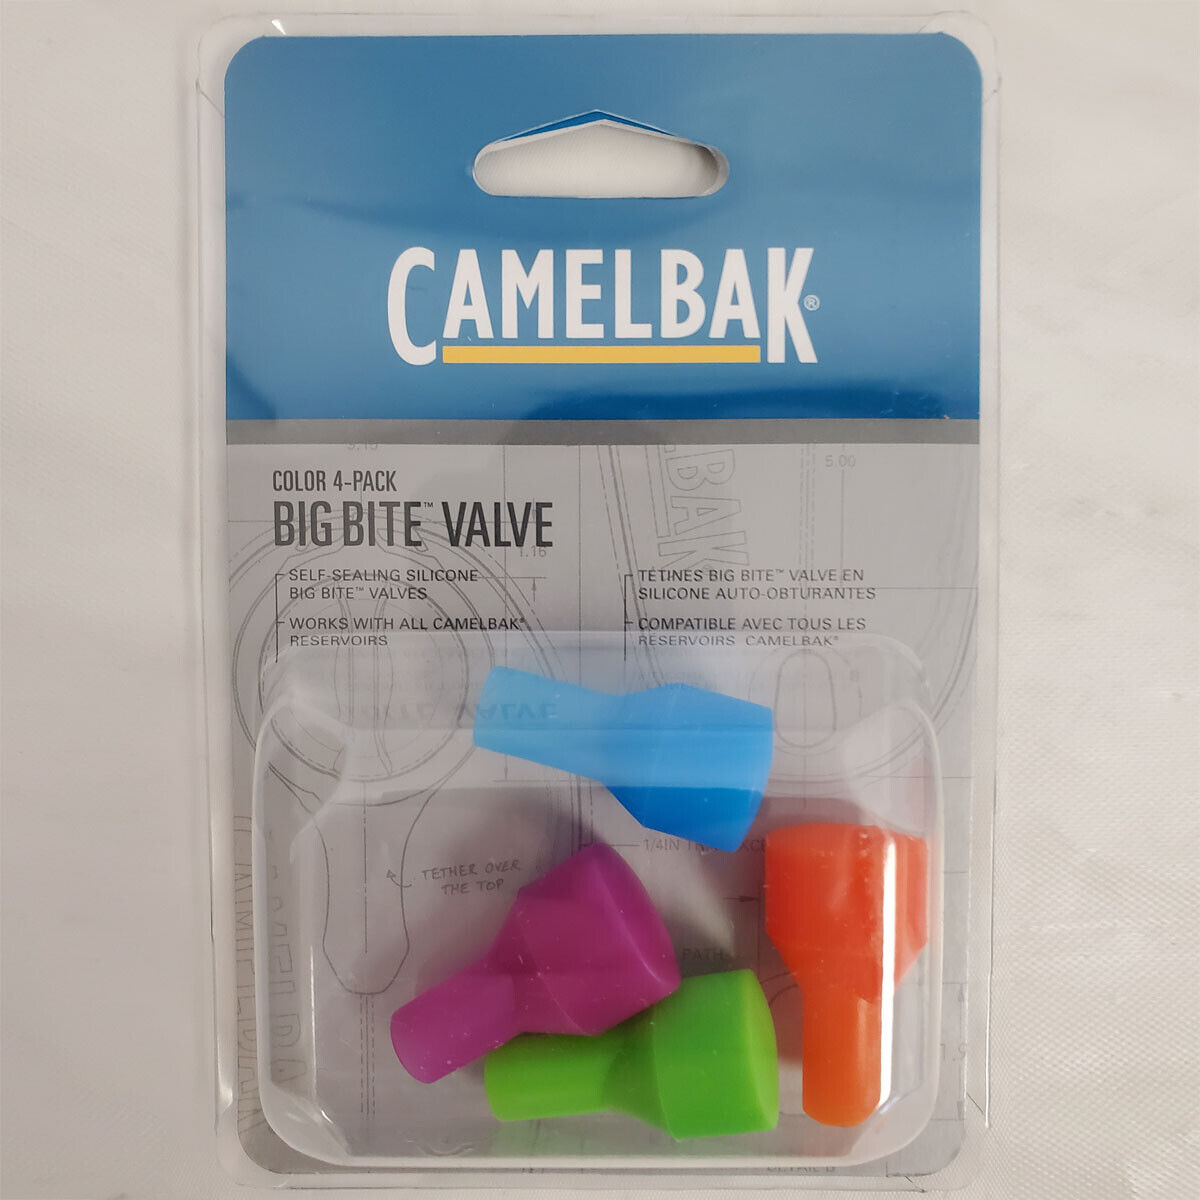 CamelBak Hydration Big Bite Valve Replacement Multi Color Mouth Piece 4 pc. 886798910260 eBay